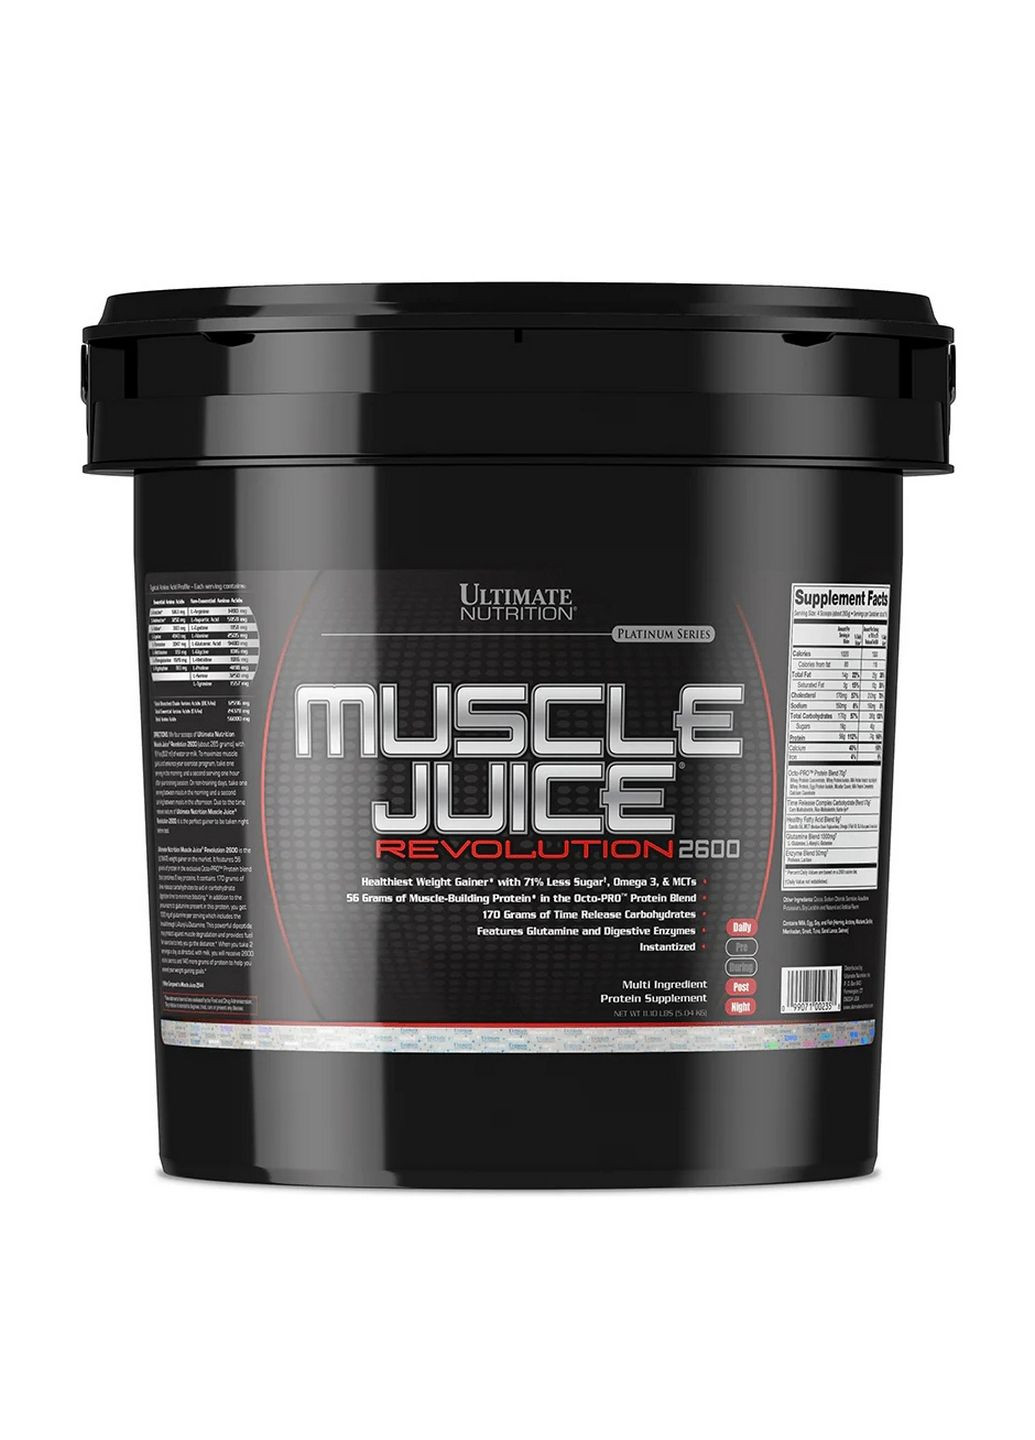 Гейнер Ultimate Muscle Juice Revolution 2600, 5 кг Клубника Ultimate Nutrition (293481151)